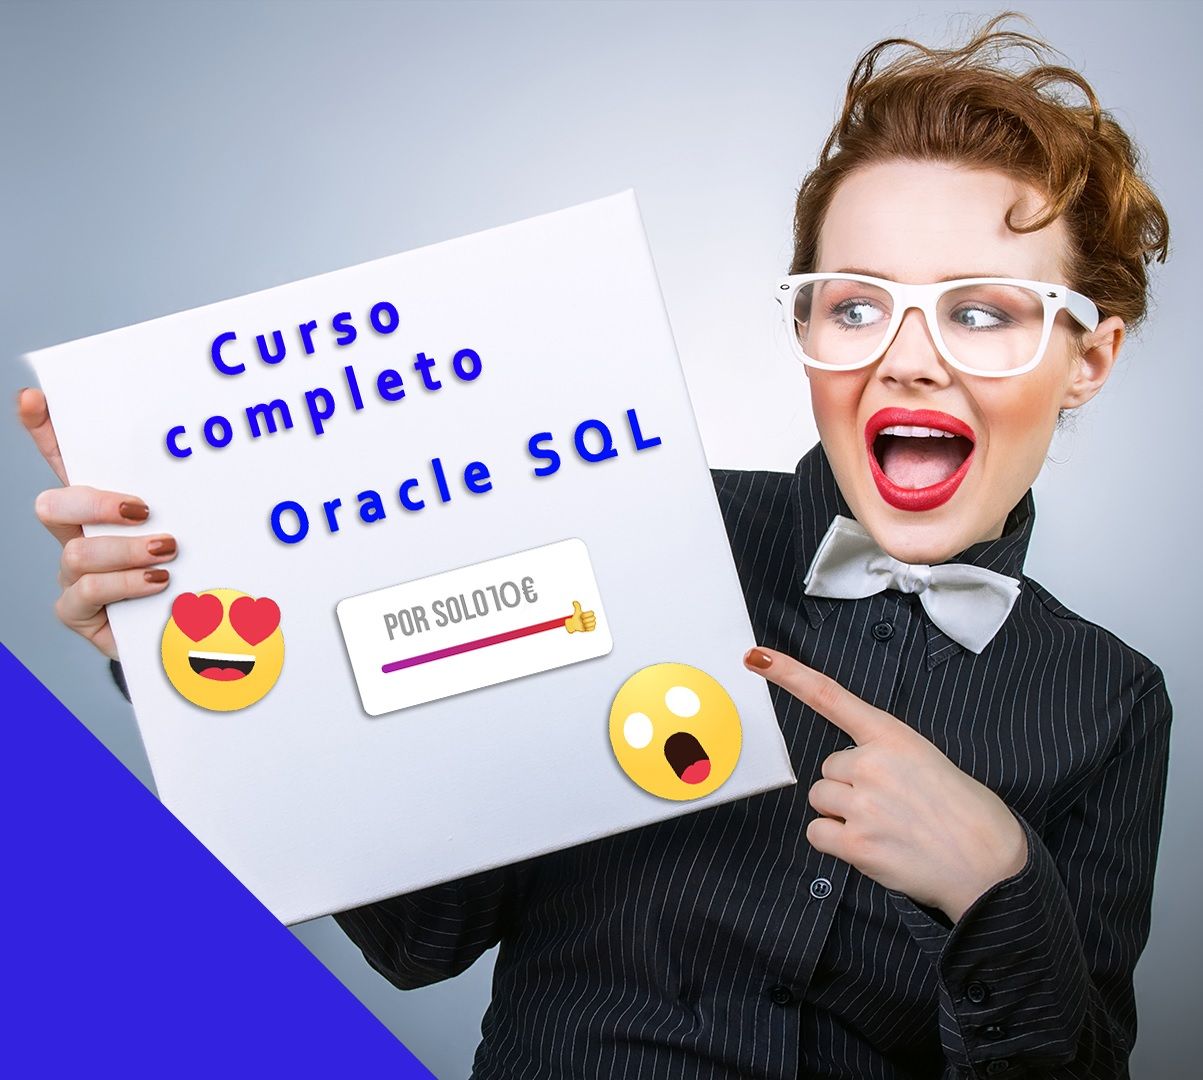 Curso Completo Oracle SQL + Examen 1Z0-061 / 1Z0-071 Oficiales sorprendete ousha